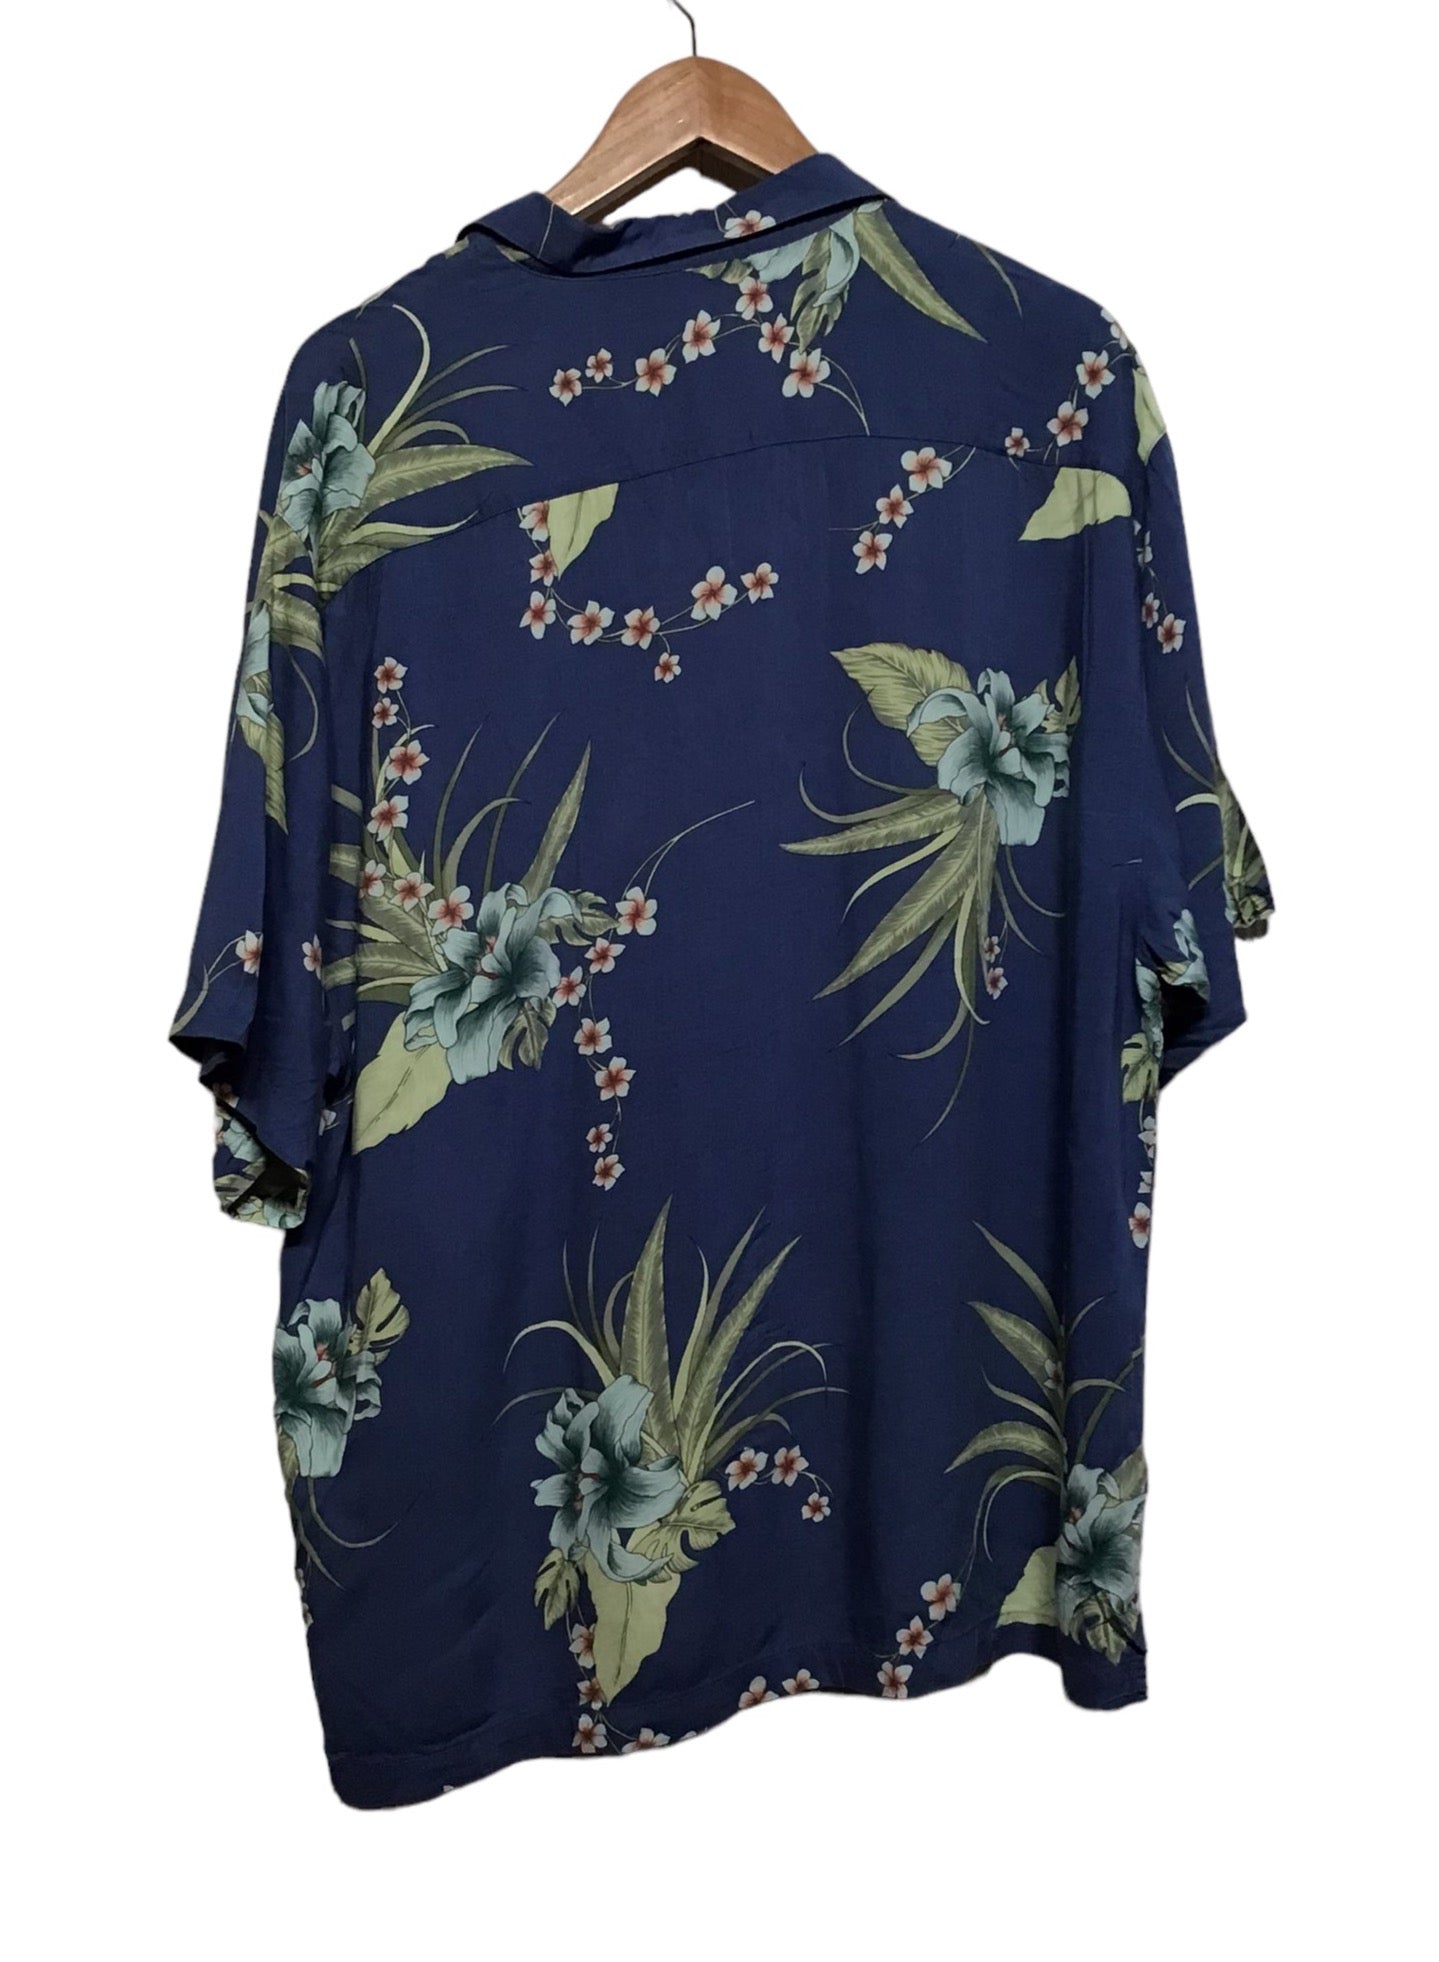 Leaf & Flower Hawaiian Shirt (Size L)